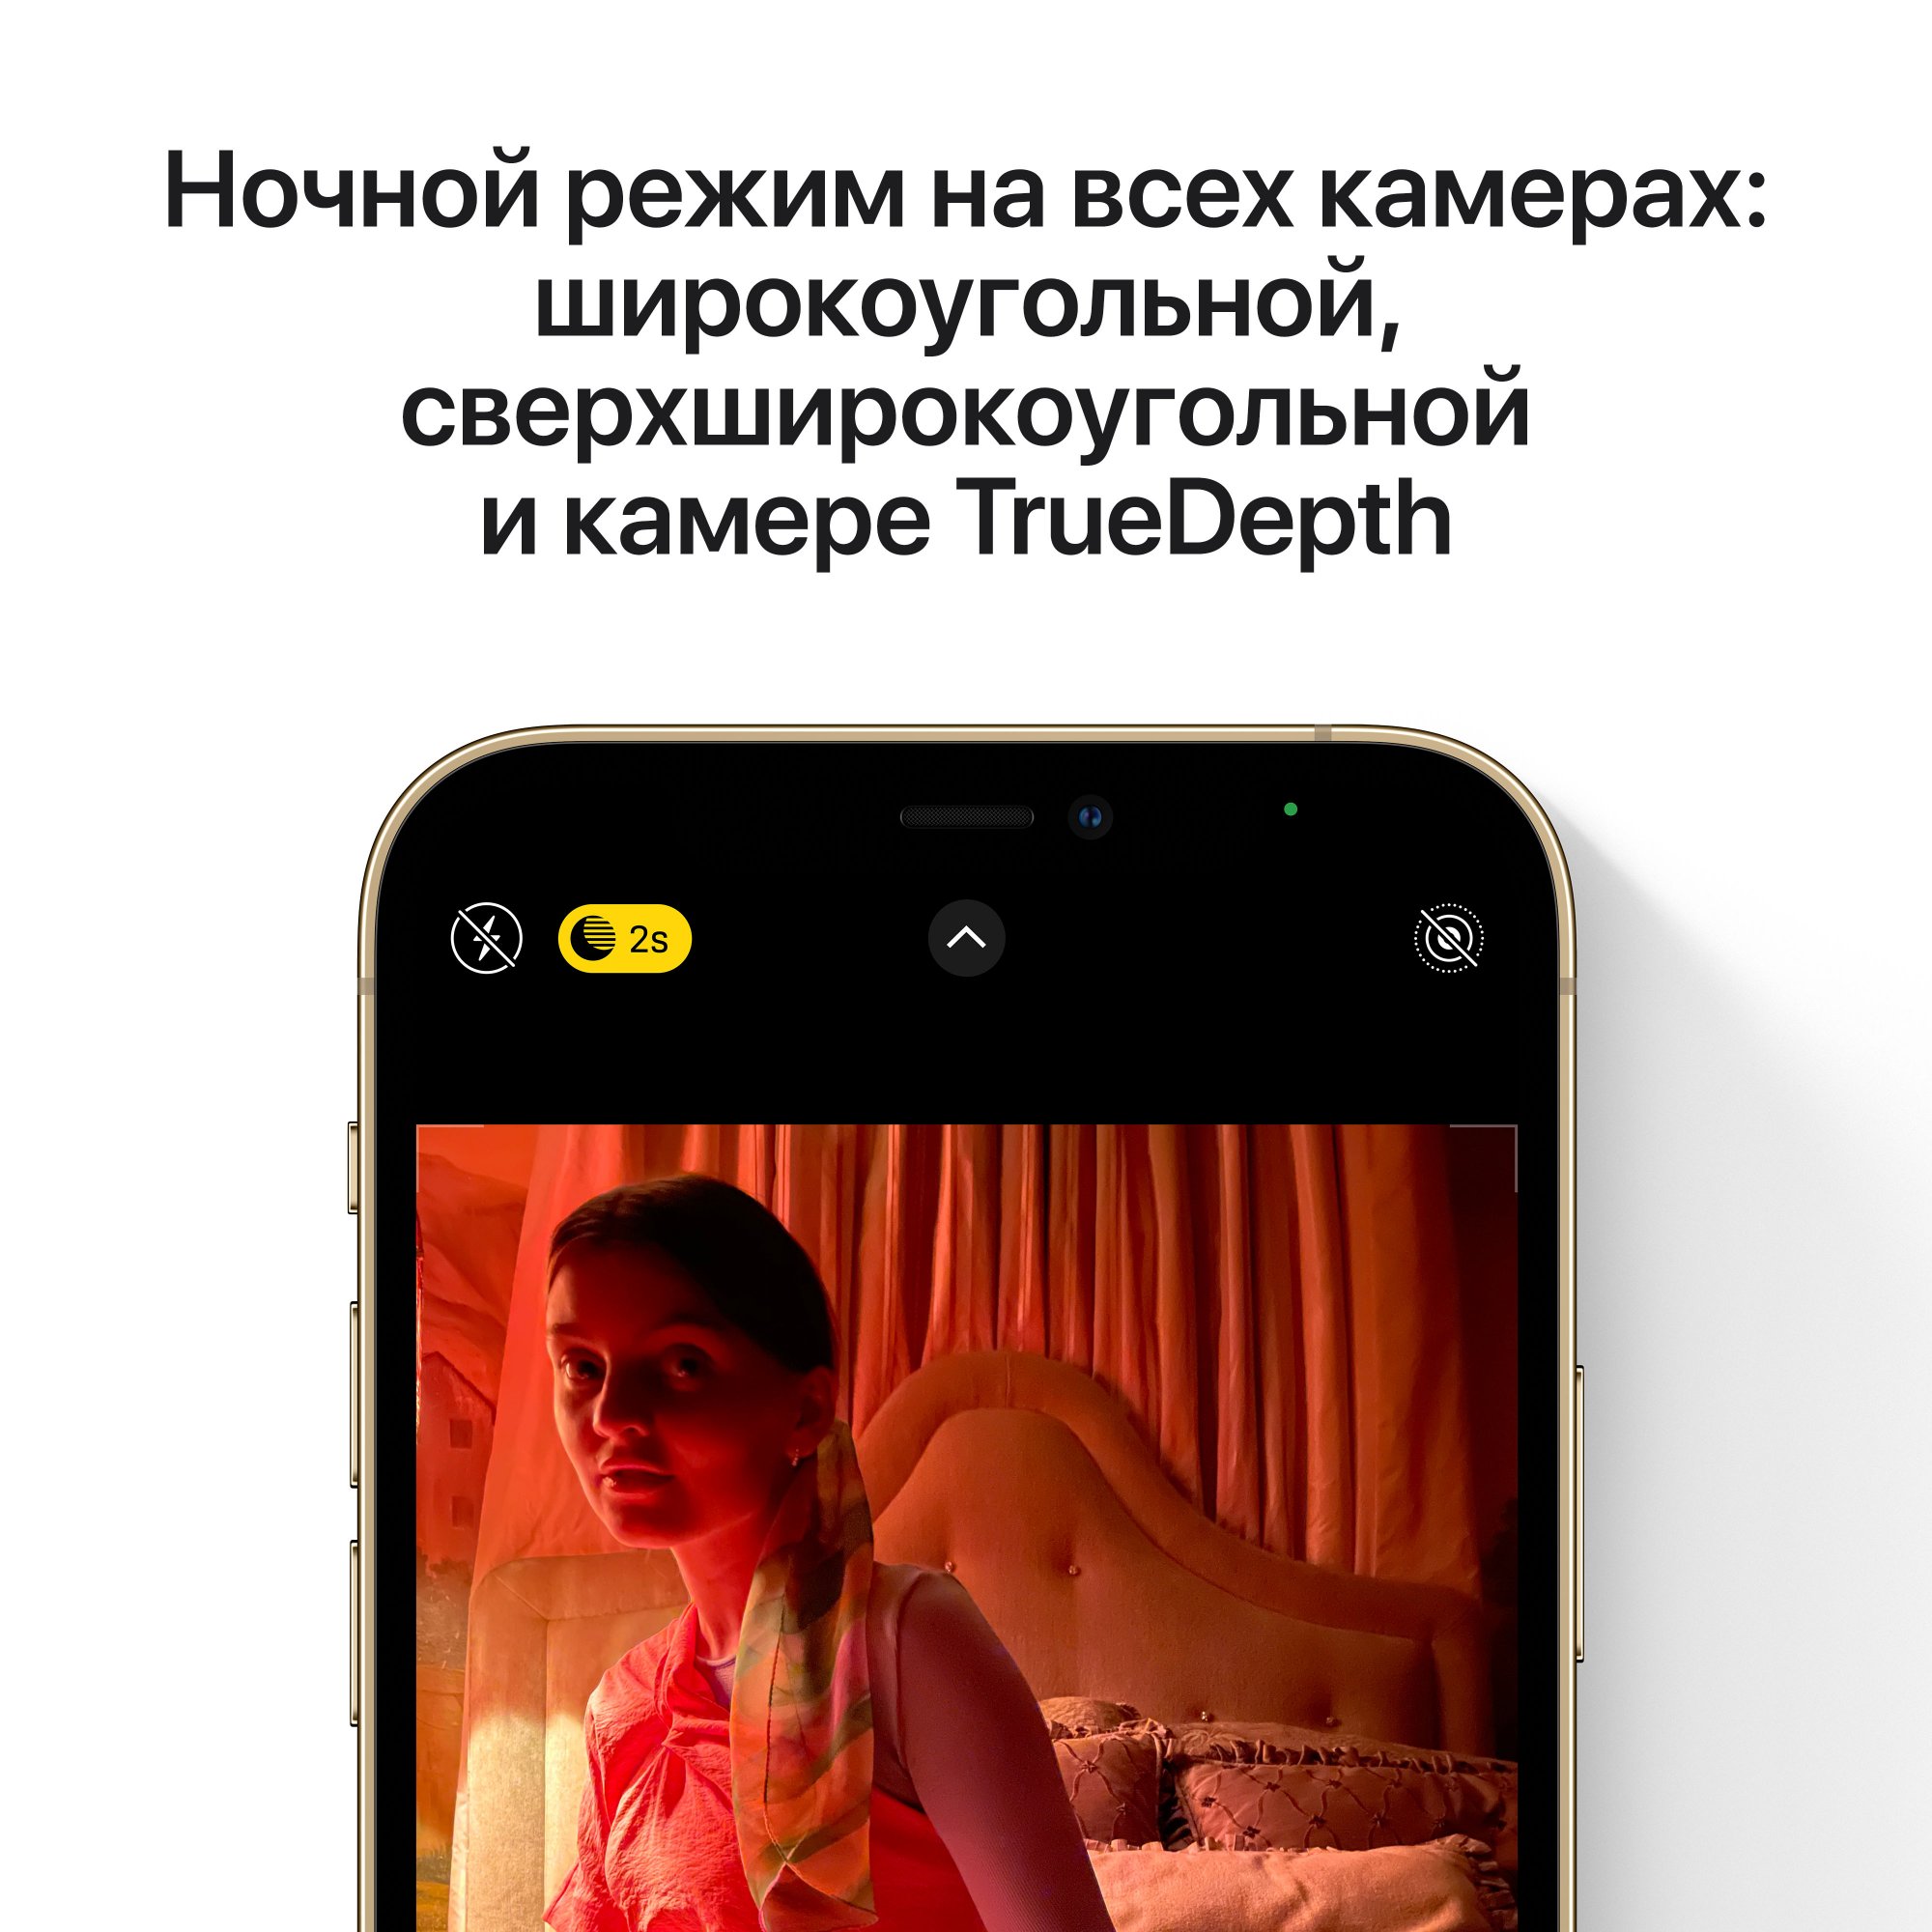 Smartfon Apple Iphone 12 Pro Max 128gb Gold Mgd93 Kupiti V Ukrayini Cini Oglyadi V Magazini Kts U Lvovi Odesi Ivano Frankivsku Ternopoli